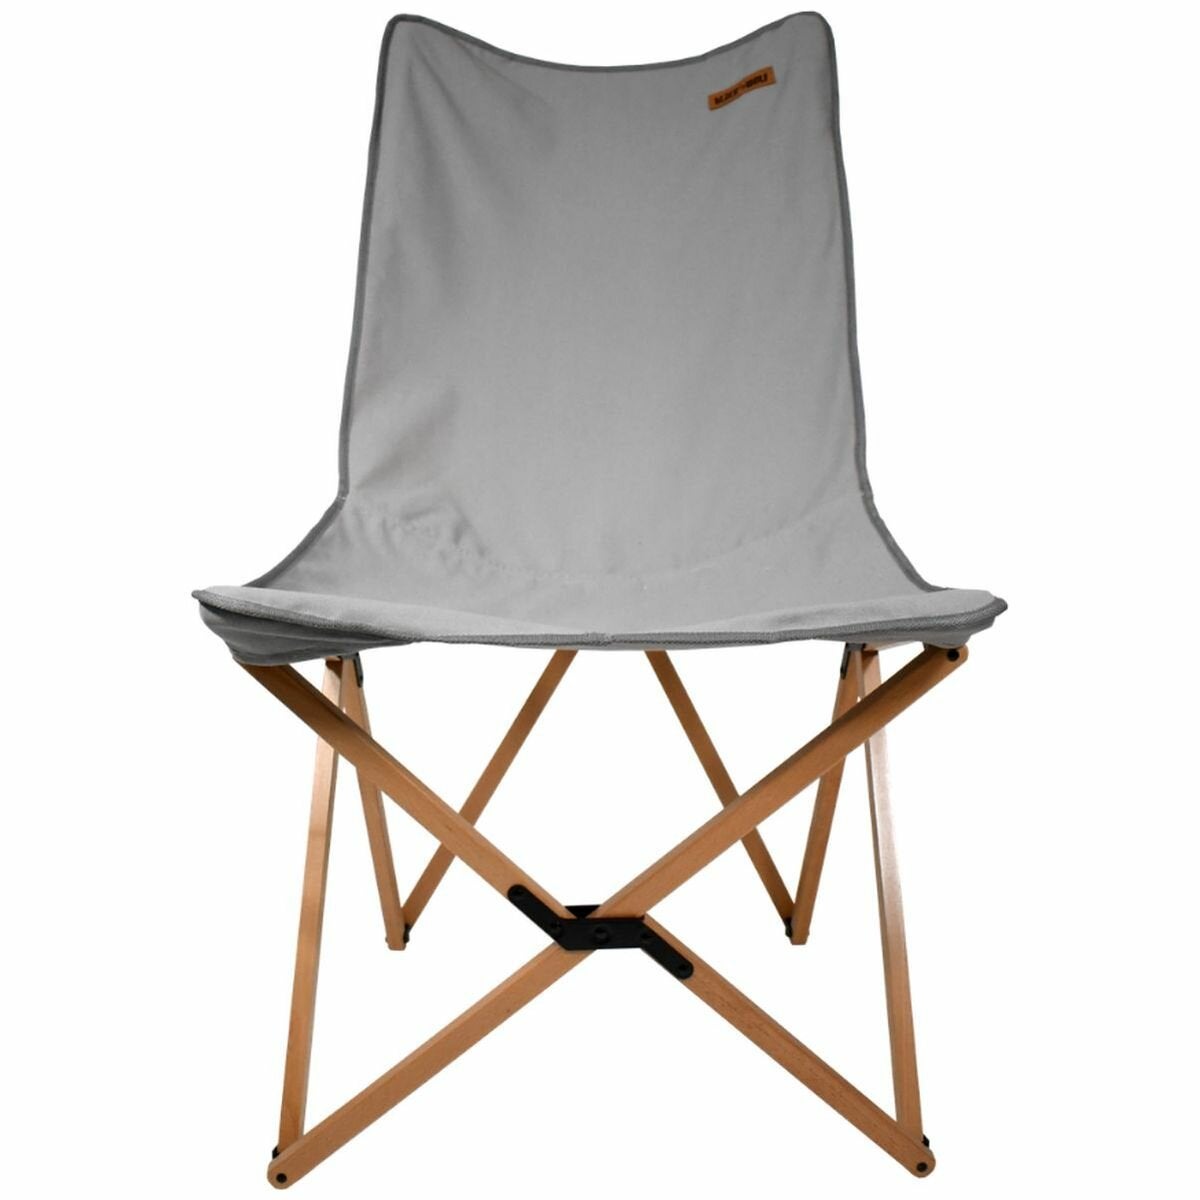 Image of BlackWolf Beech Chair Paloma Grey 32S001611361000